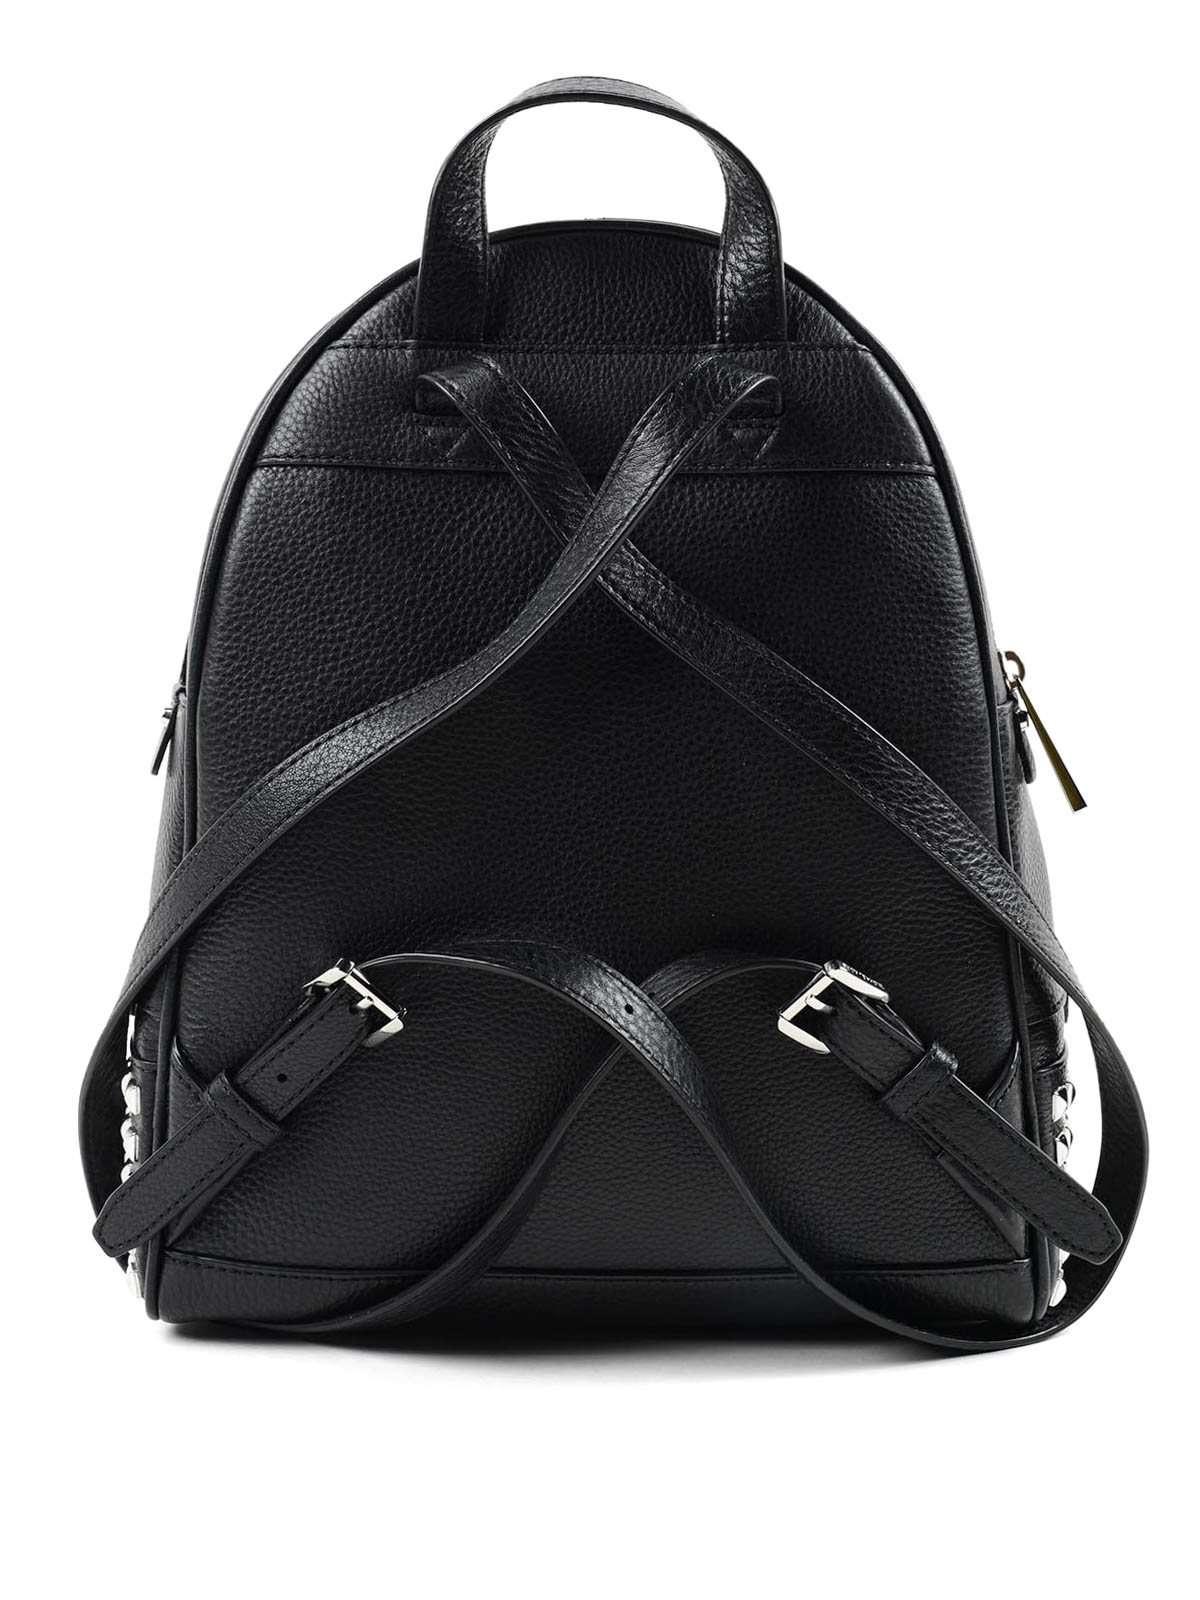 rhea studded leather backpack